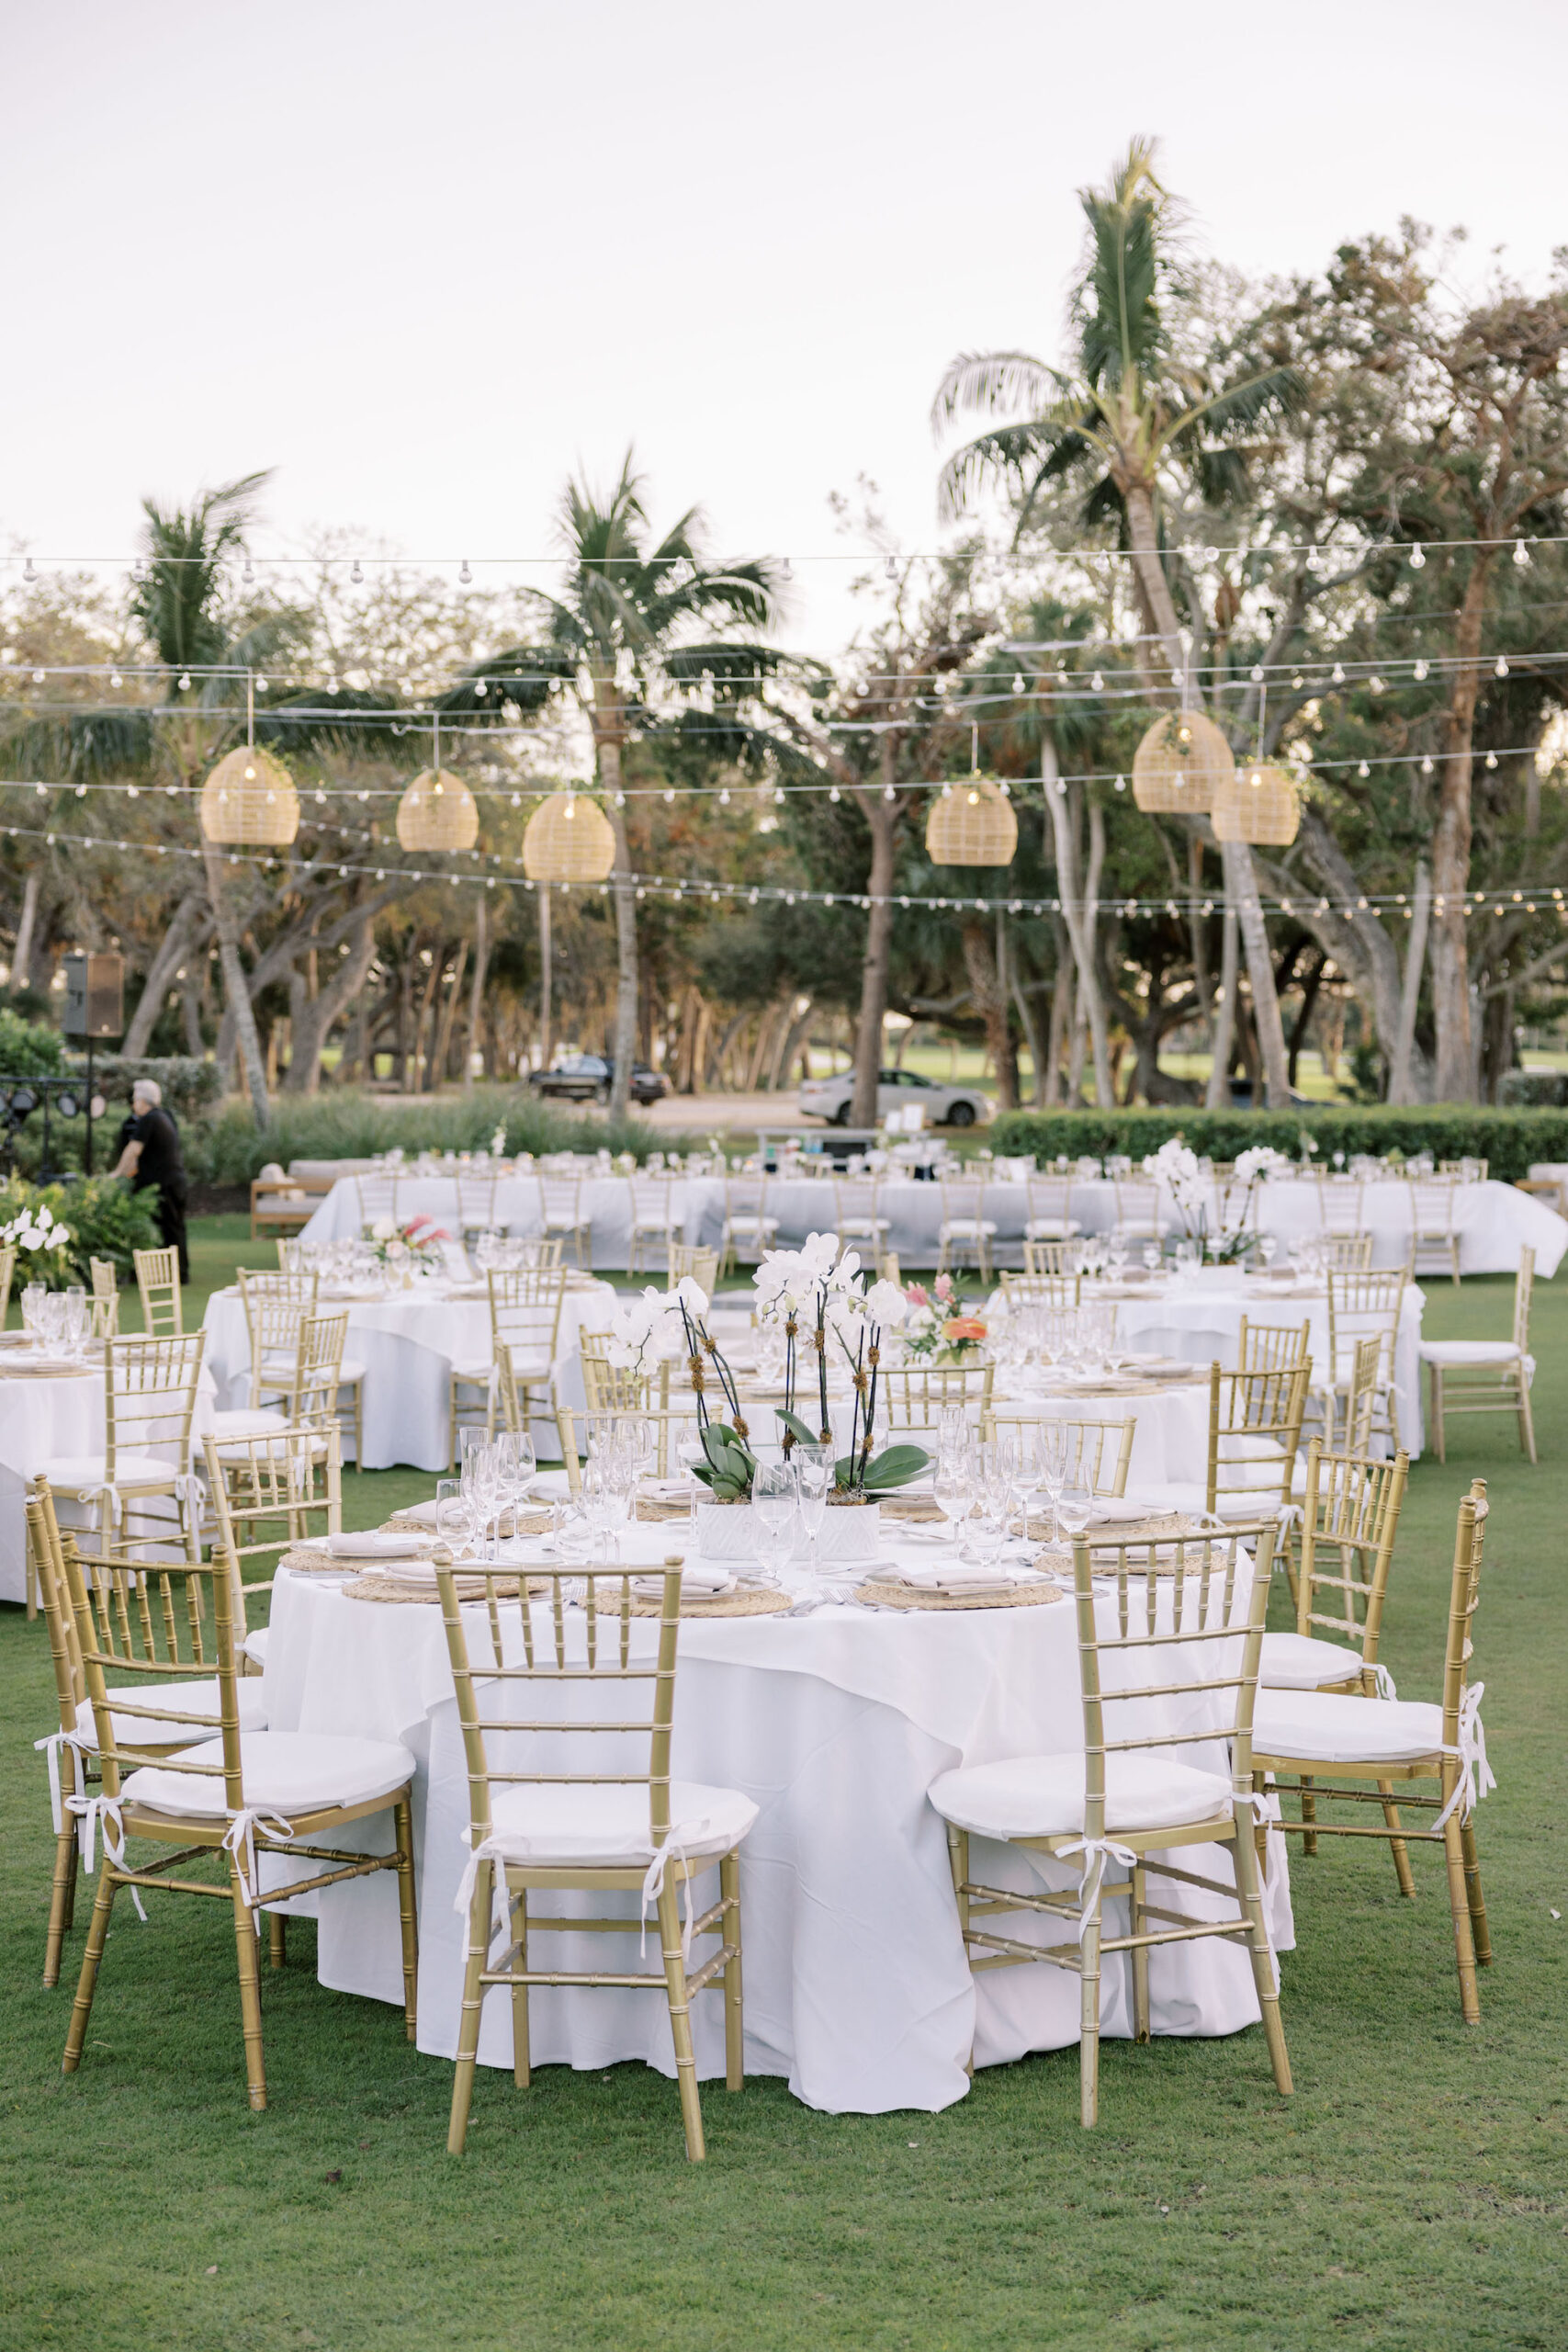 Elegant Tropical White Outdoor Wedding Reception with Gold Chiavari Chairs and Rattan Hanging Lanterns Inspiration | Sarasota Wedding Venue The Resort at Longboat Key Club